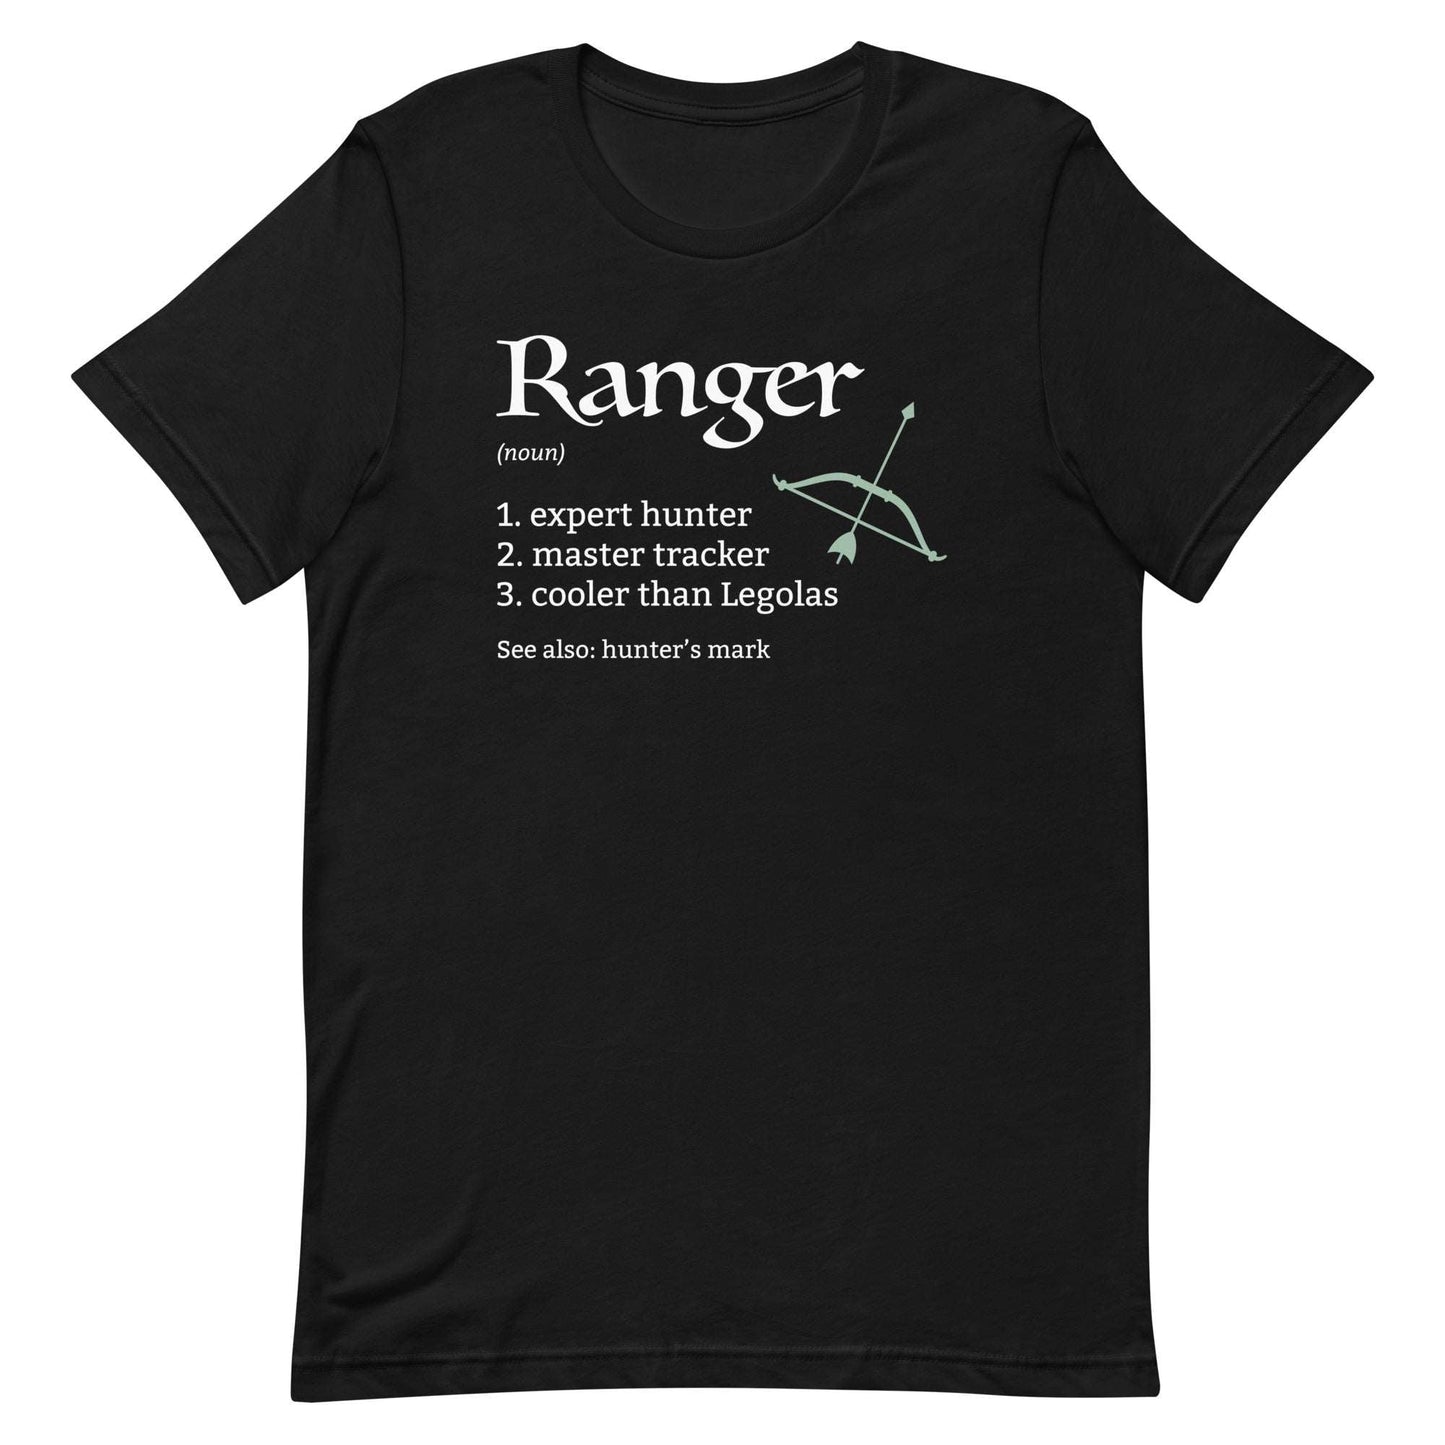 Ranger Class Definition T-Shirt – Funny DnD Definition Tee T-Shirt Black / S